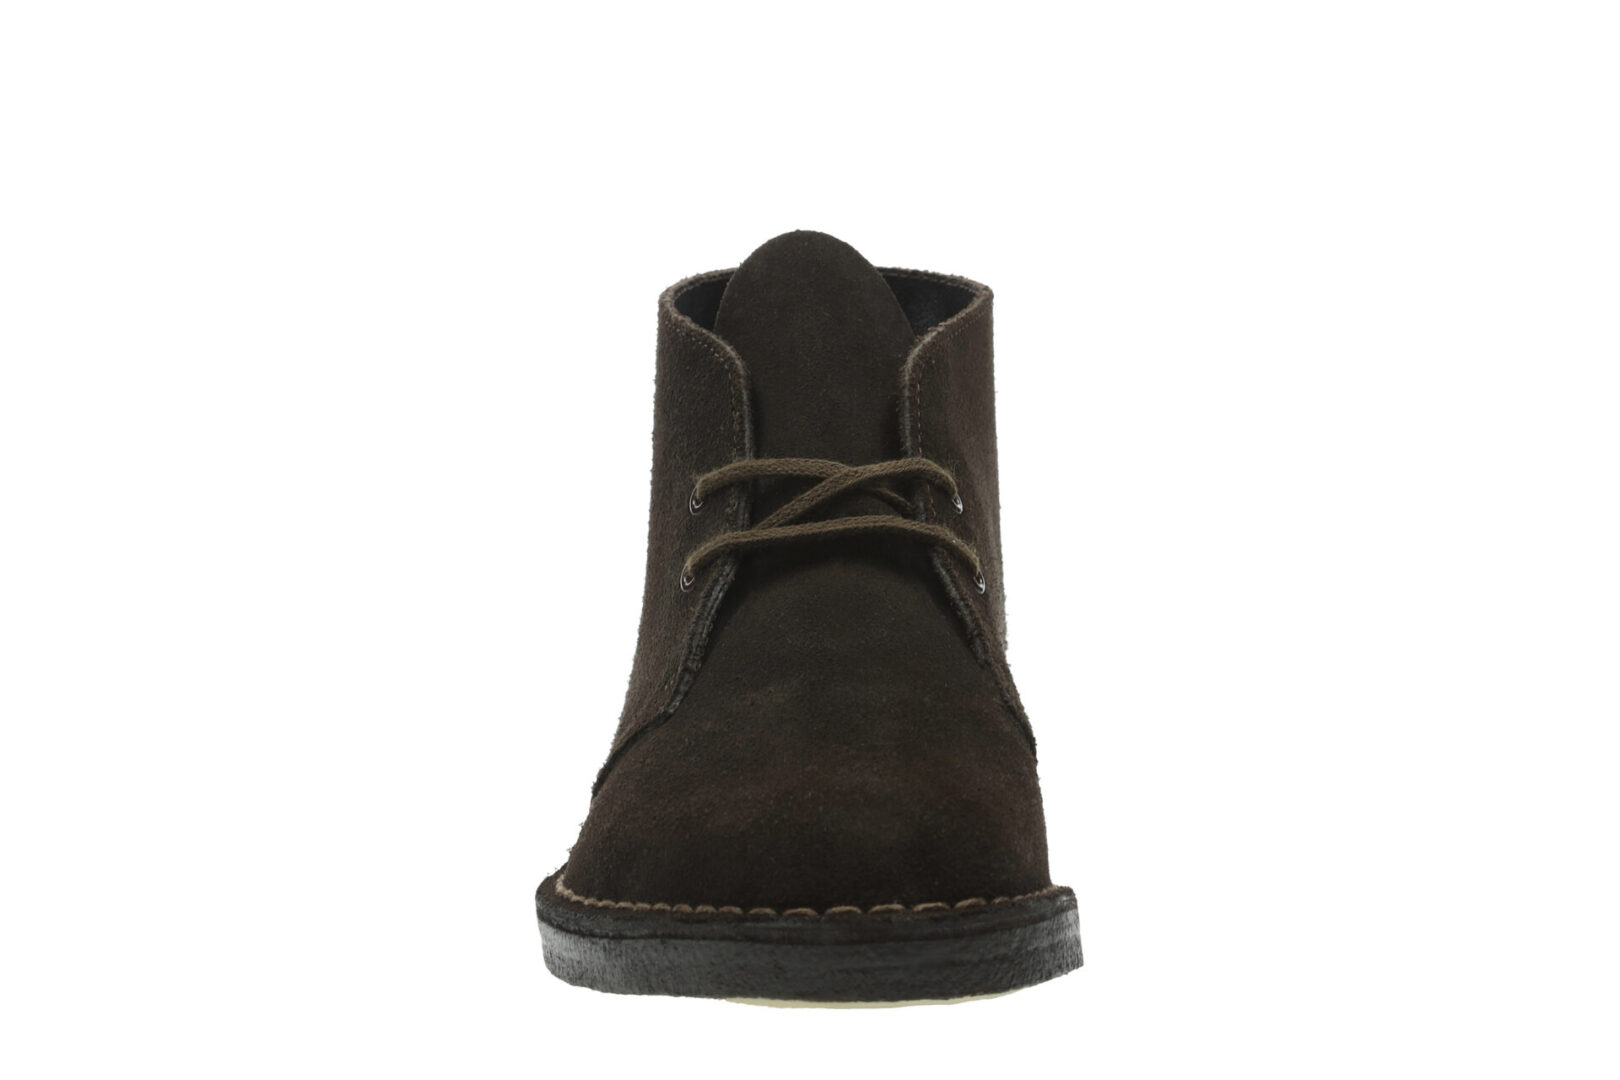 Clarks Desert Boot Brown Suede 26155485 - Latch Shoe